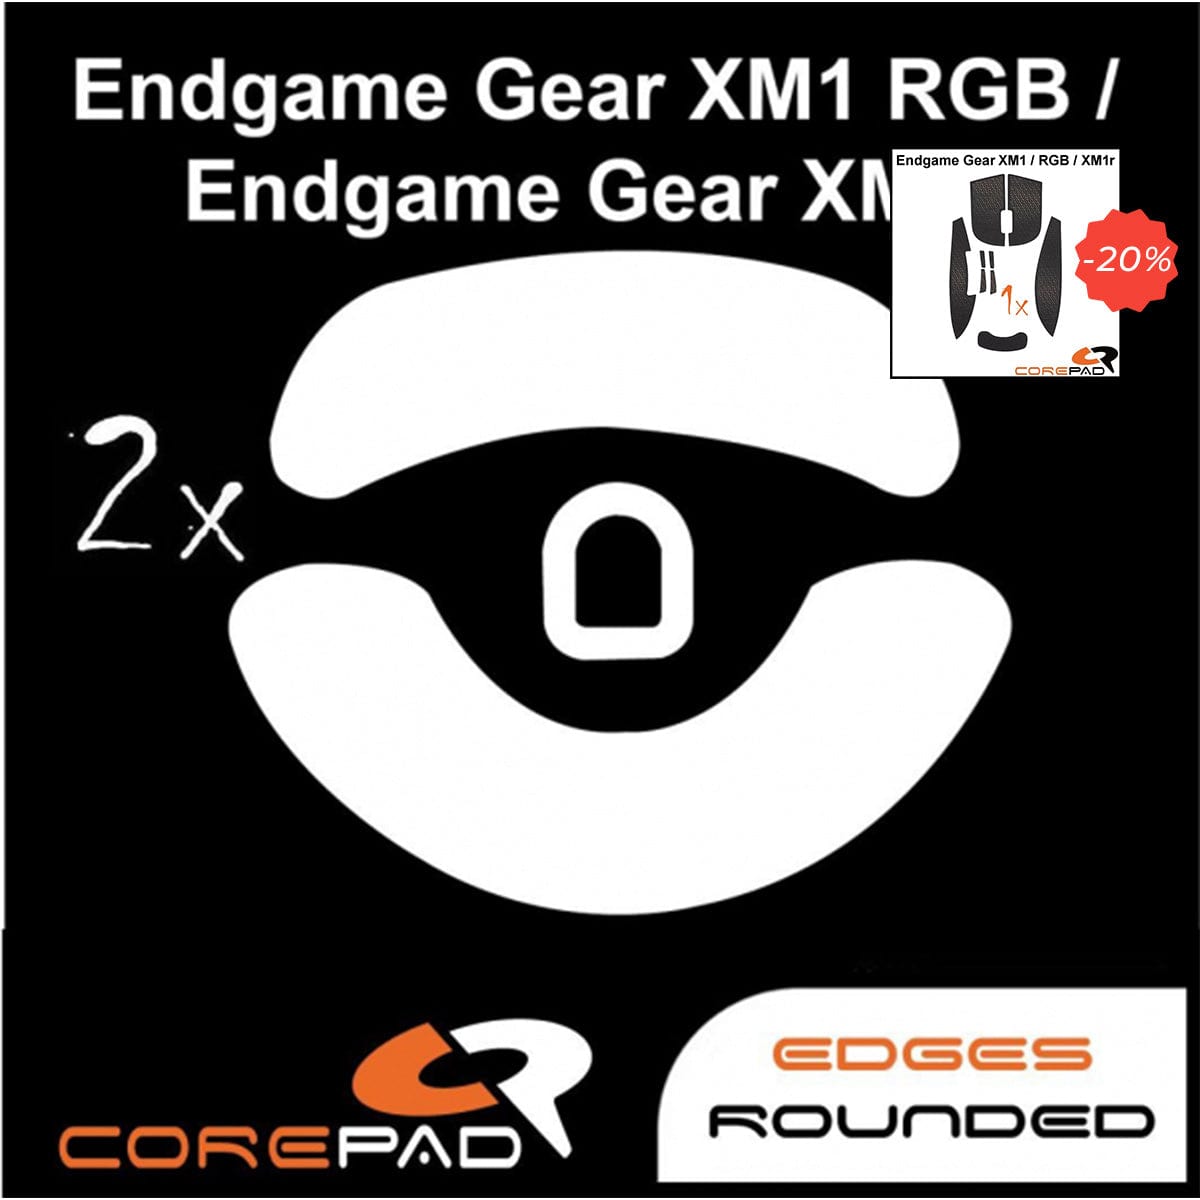 Bundle Feet + Grip tape Corepad - Endgame Gear XM1 RGB / Endgame Gear XM1r